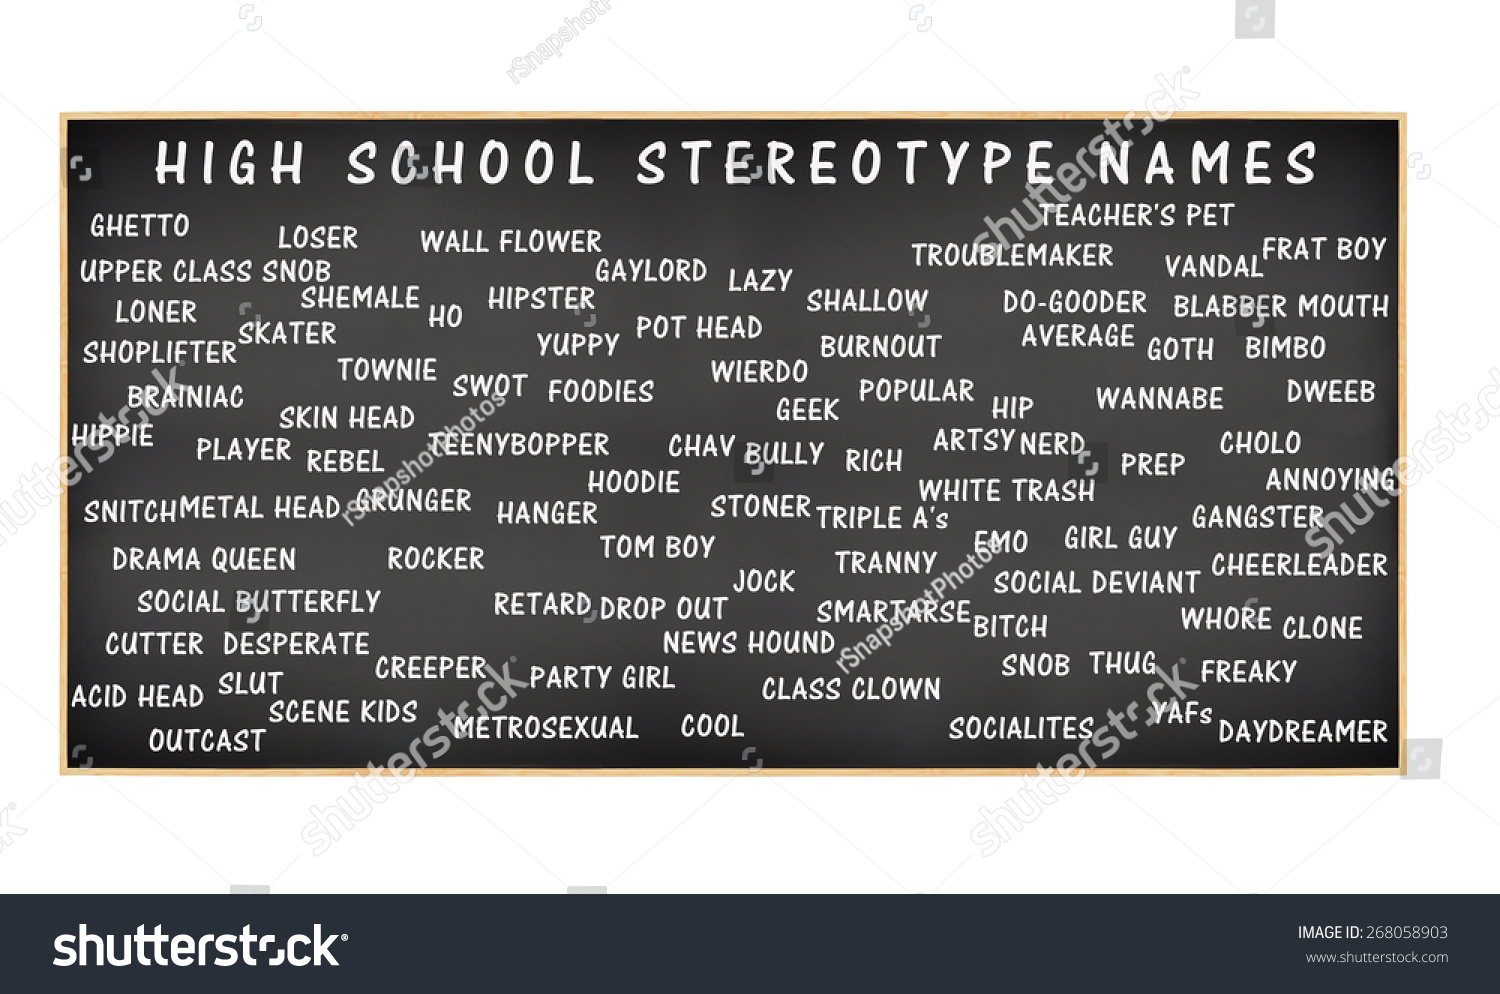 Stereotypes high school High School